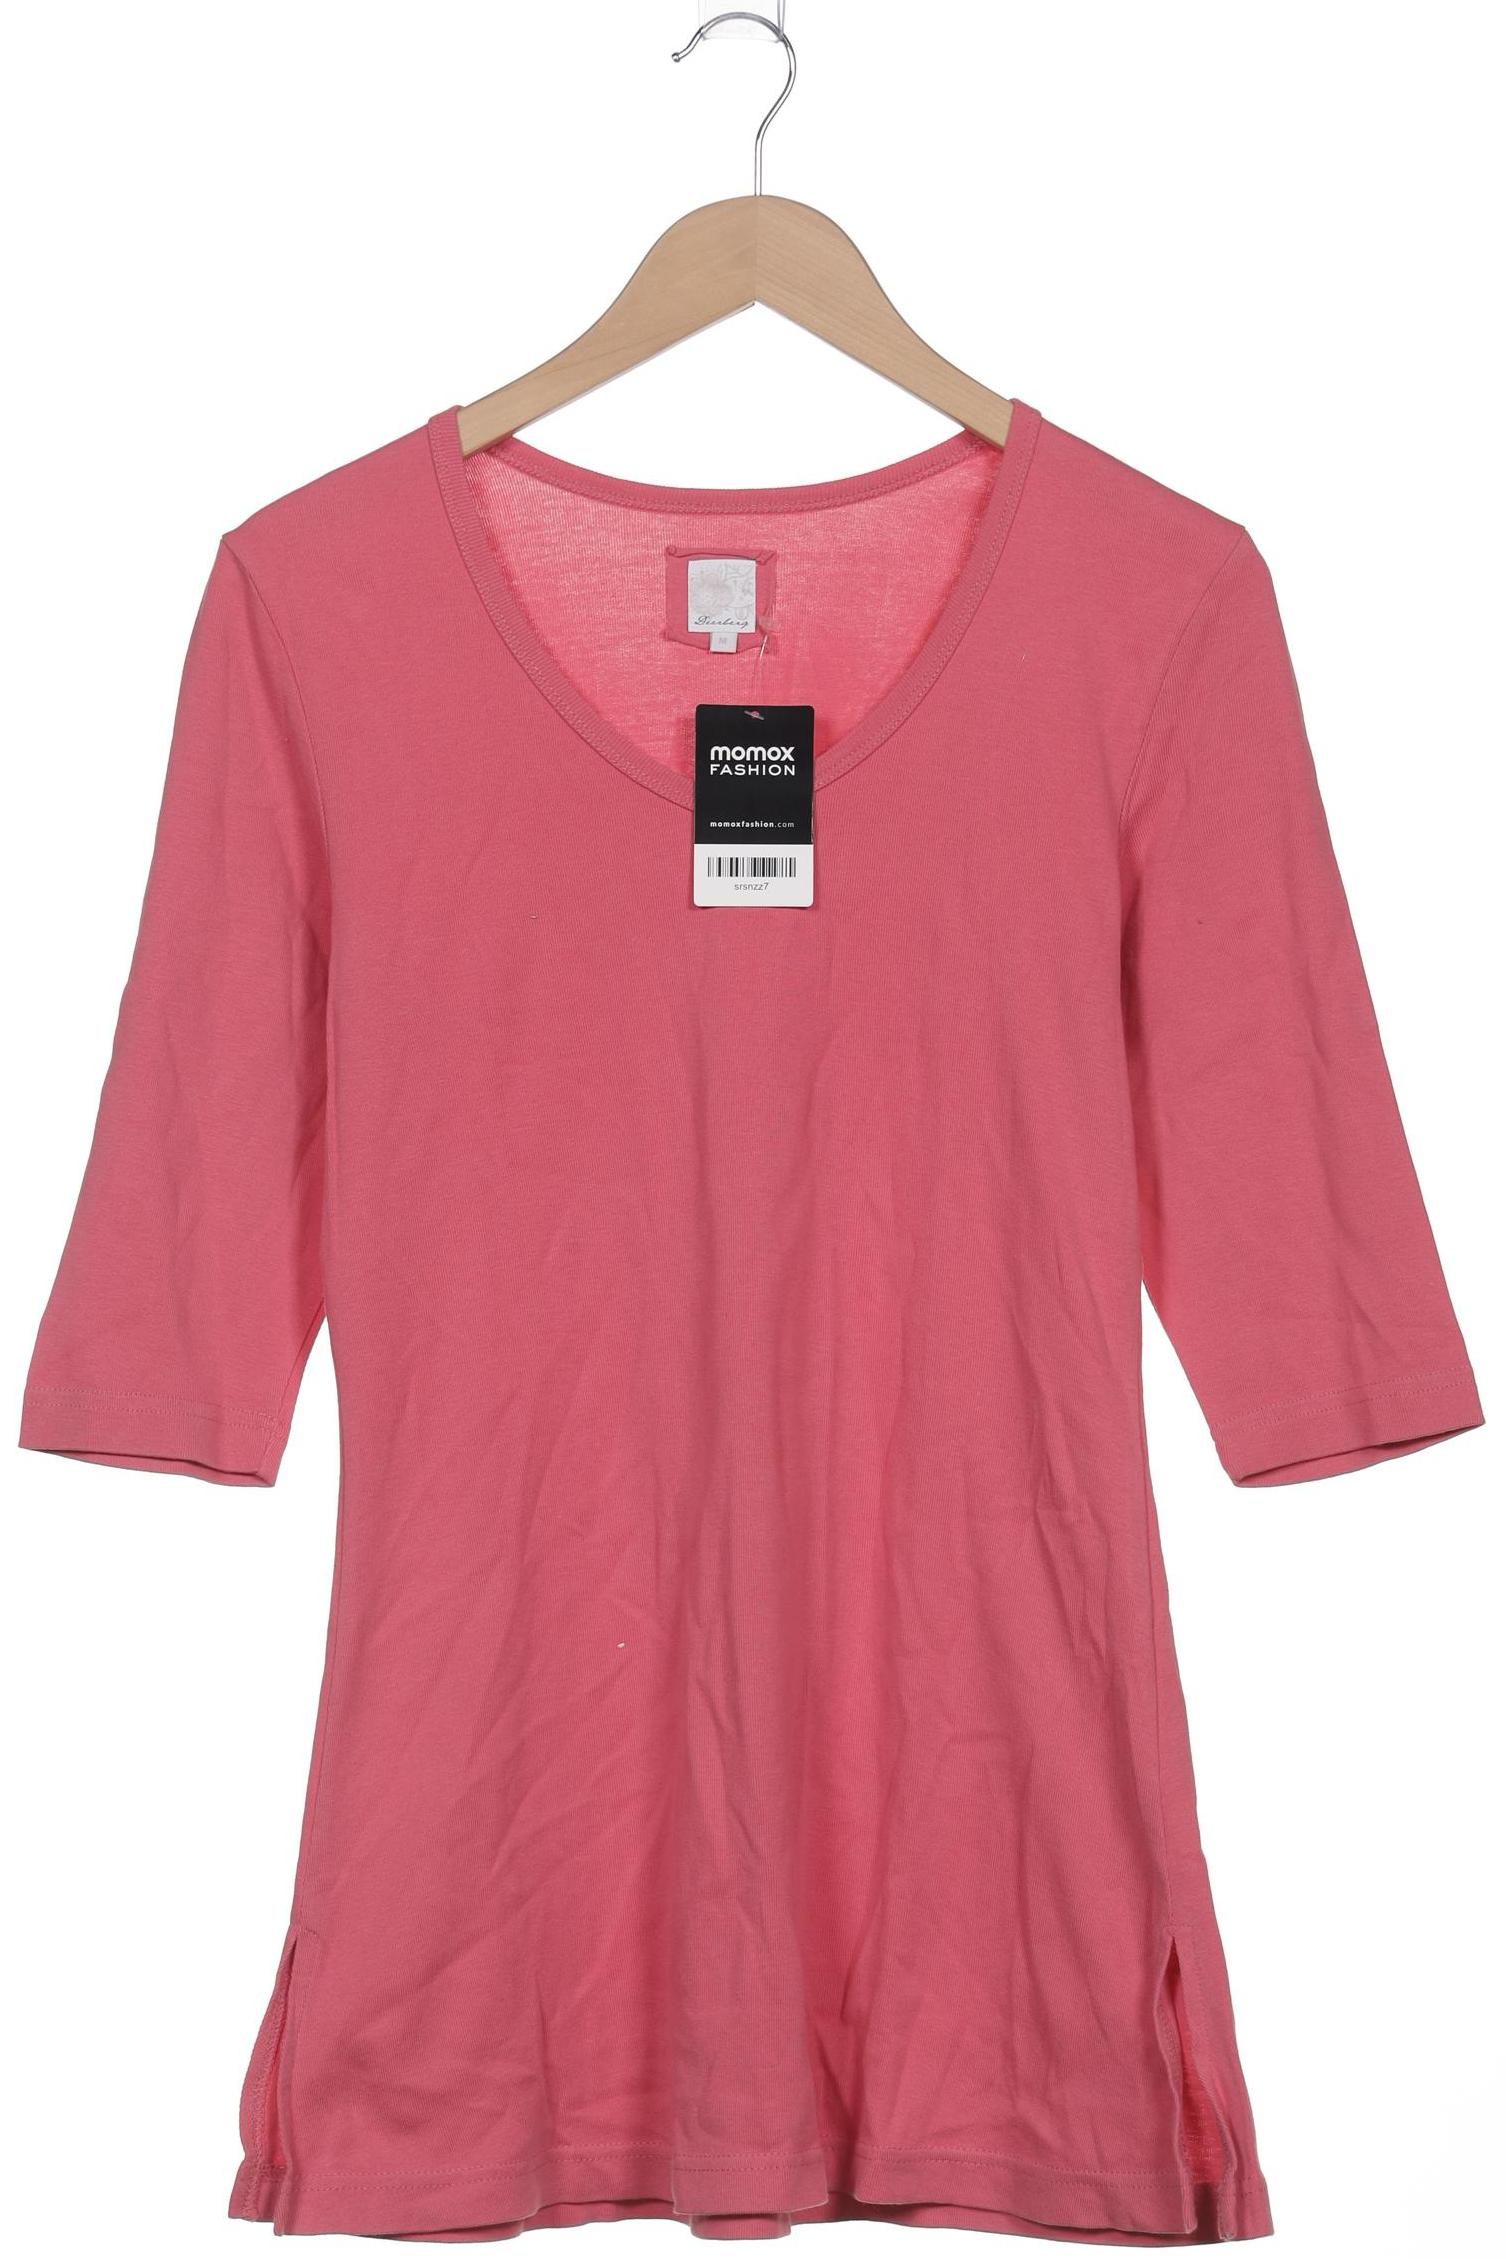 Deerberg Damen T-Shirt, pink, Gr. 38 von Deerberg